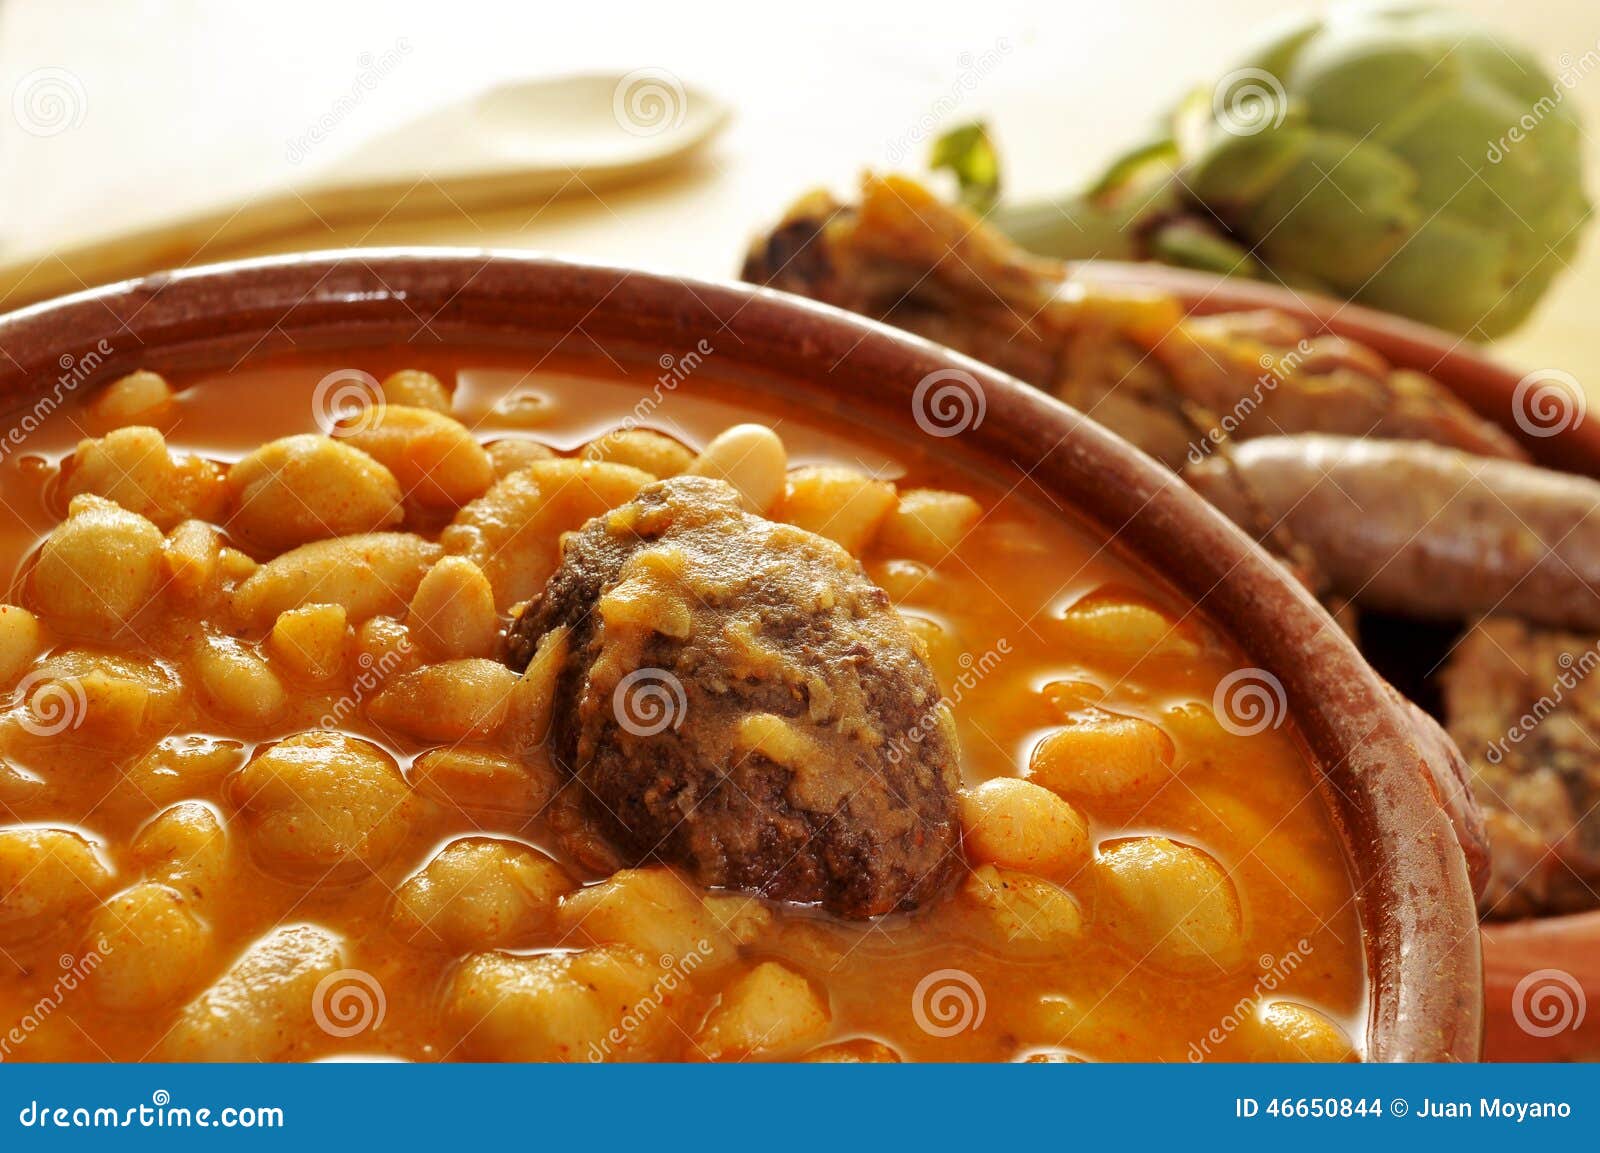 potaje de judias y garbanzos, a traditional spanish legume stew